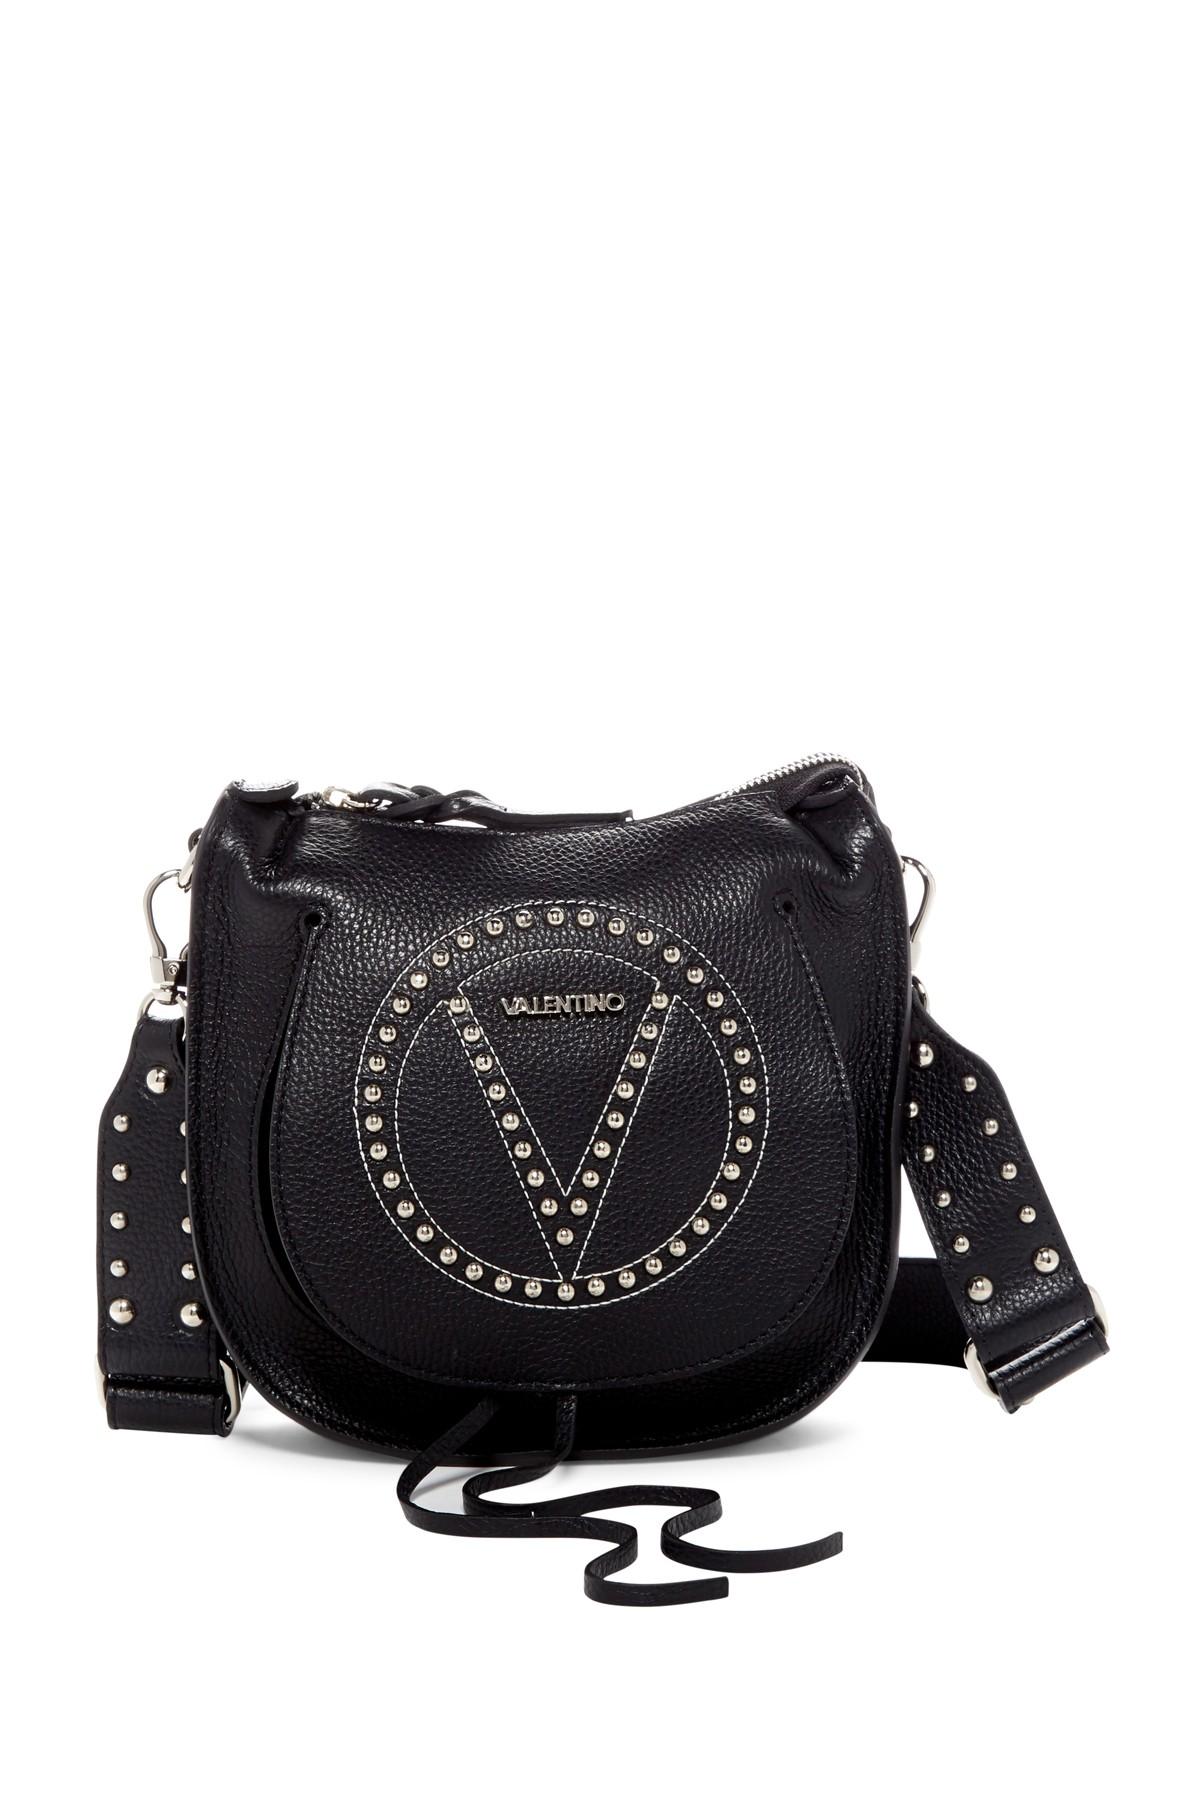 Valentino by mario valentino Sylvie Leather Saddle Bag With Guitar ...